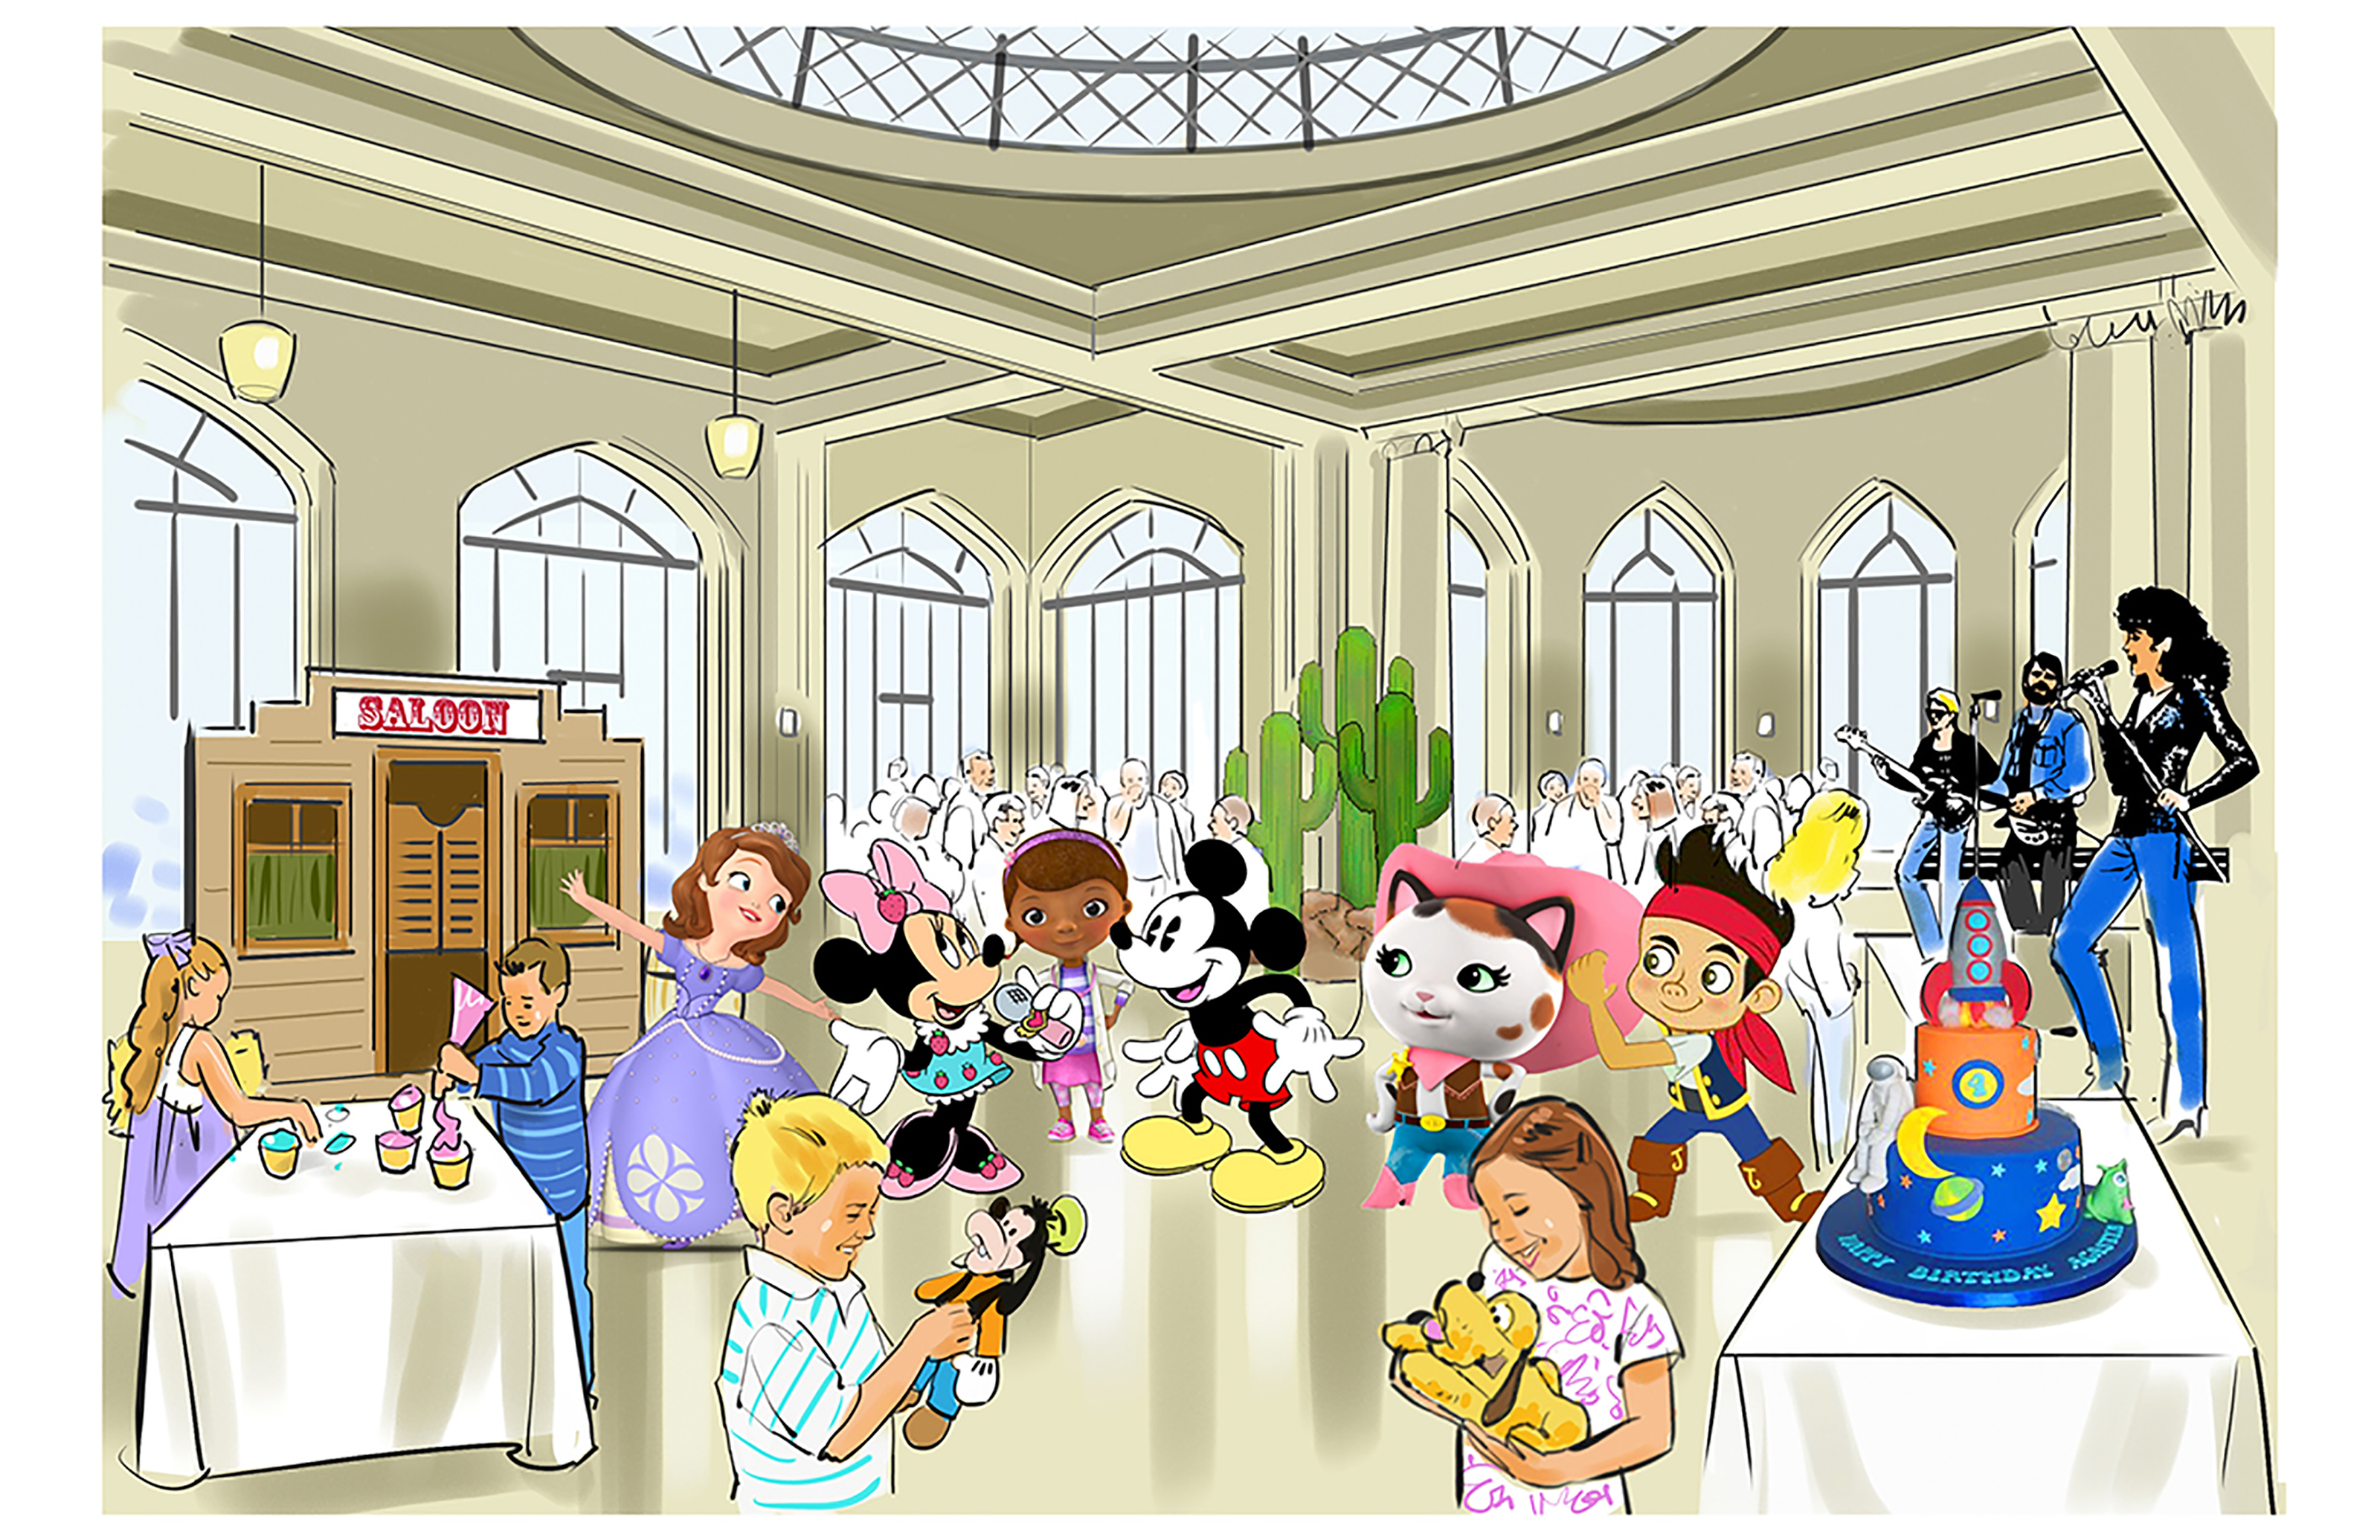 Disney Event Illustration